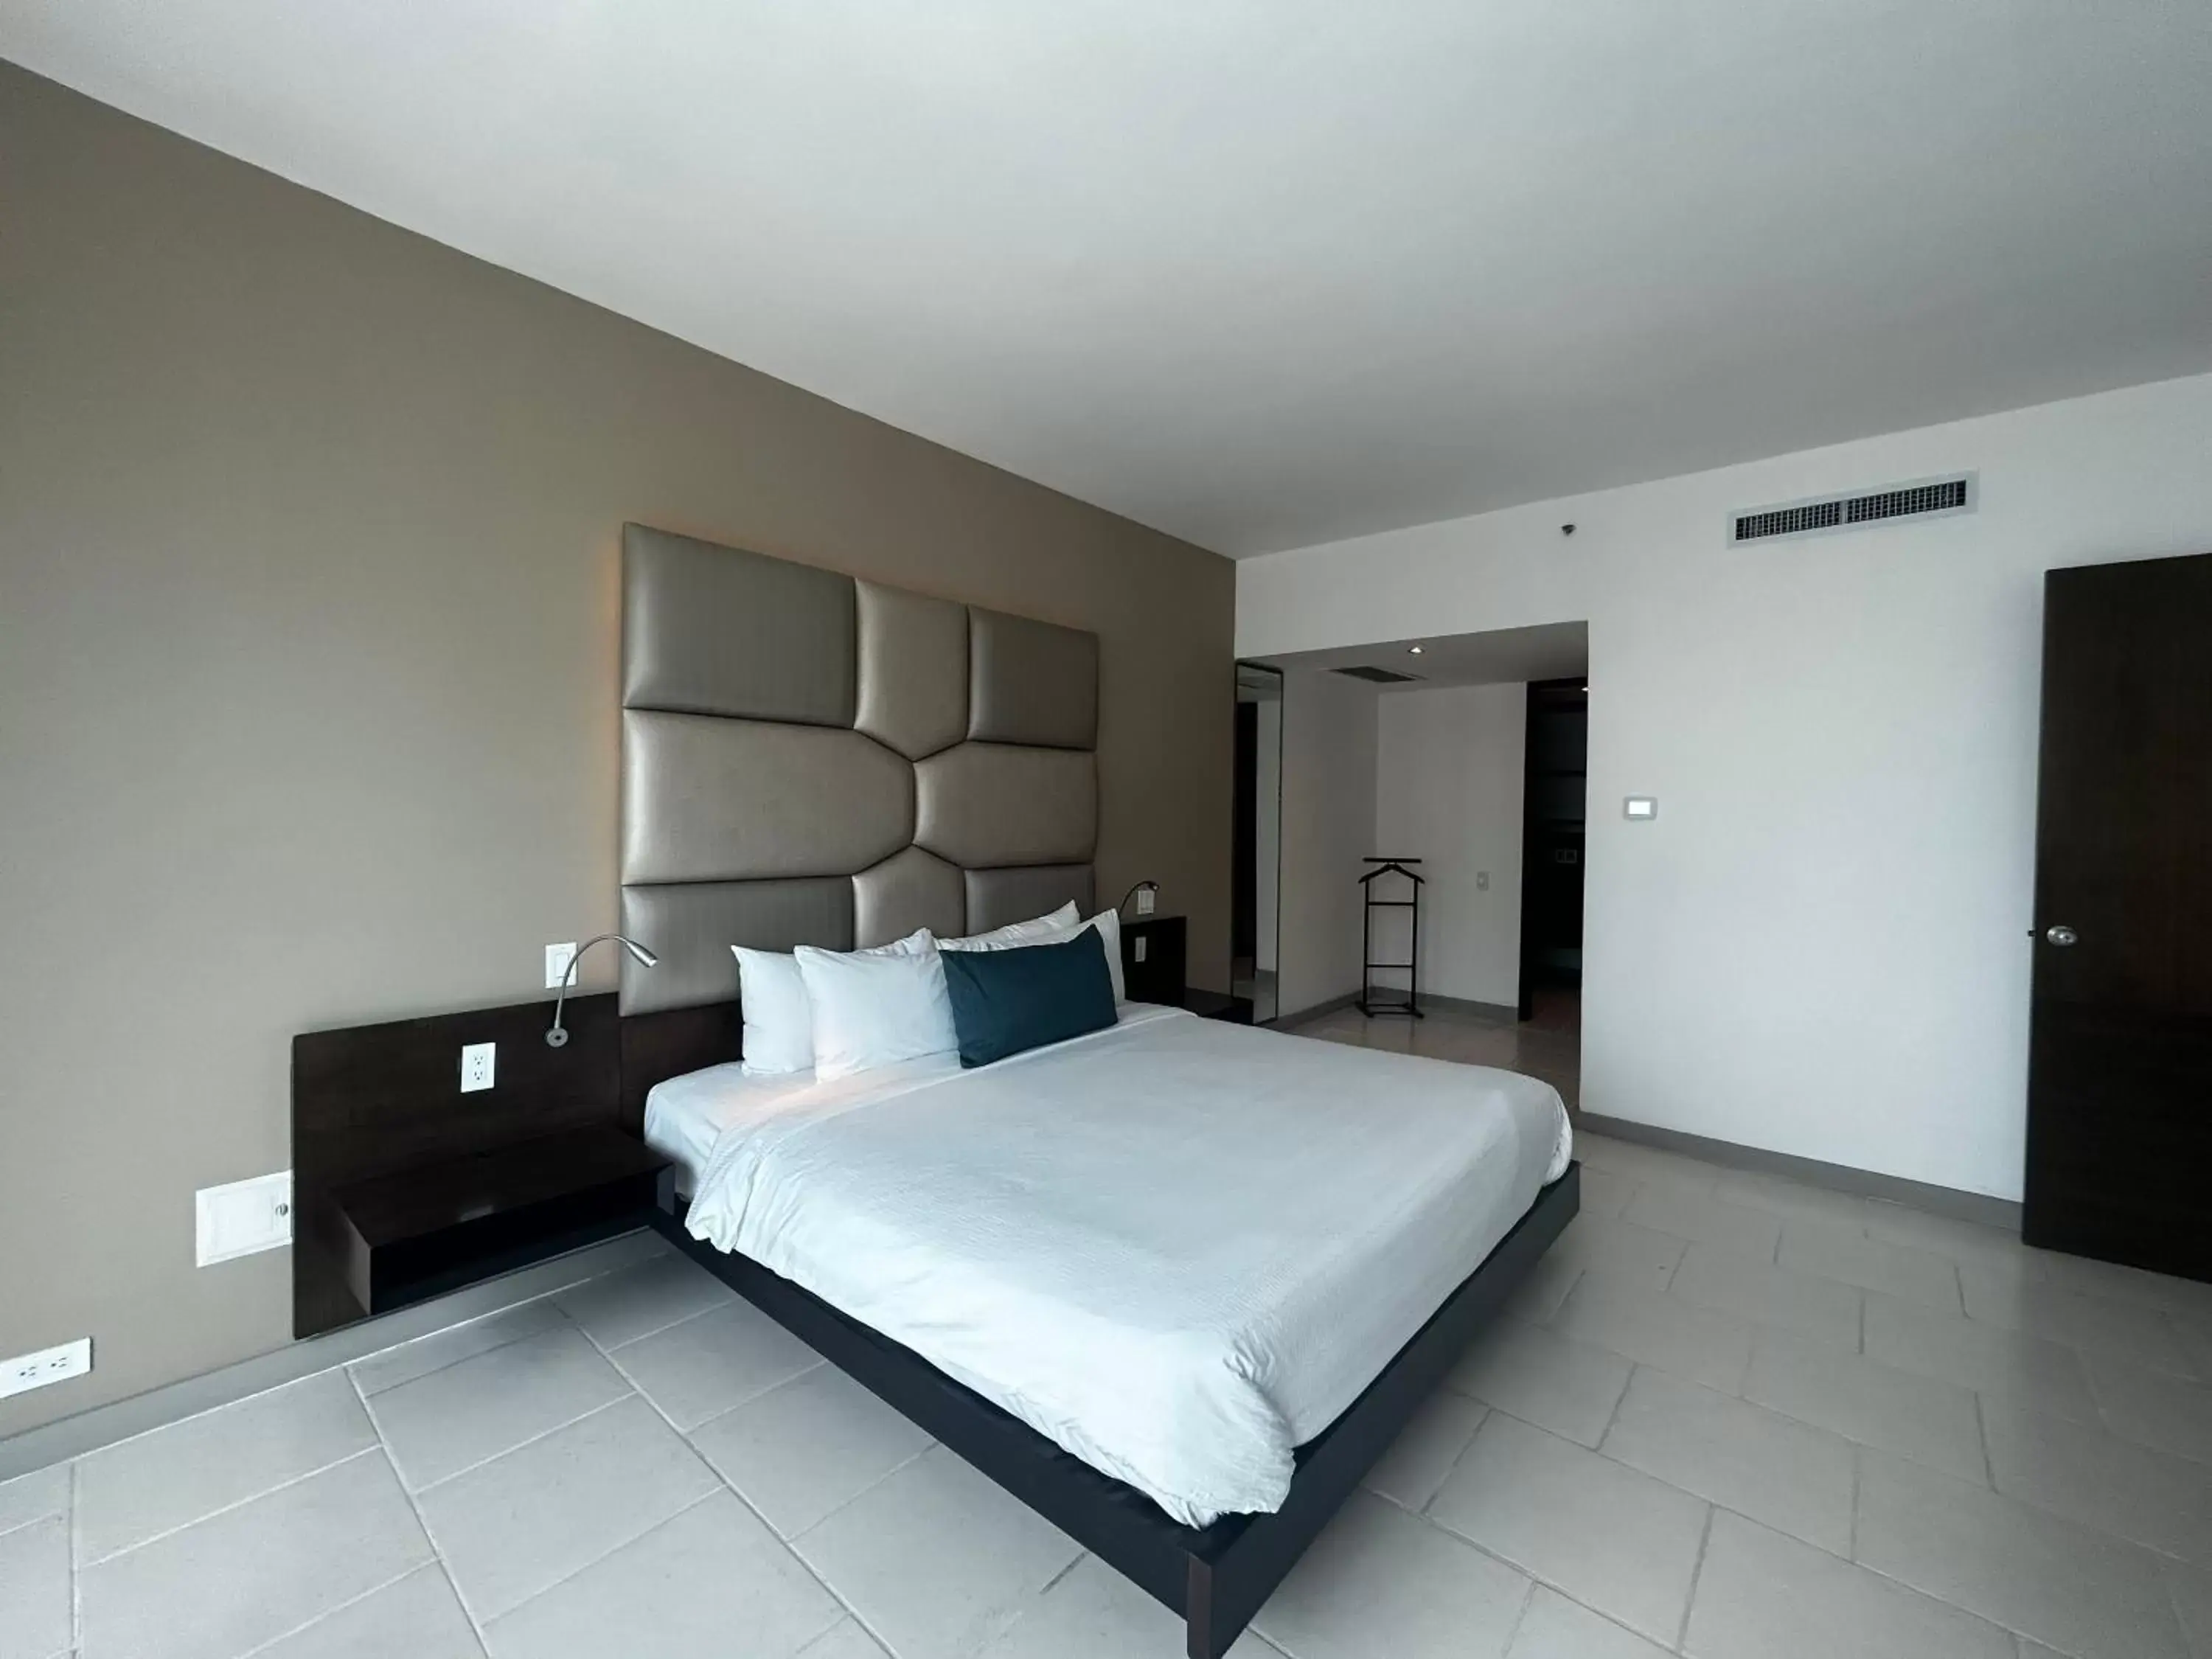 Bed in Decapolis Hotel Panama City